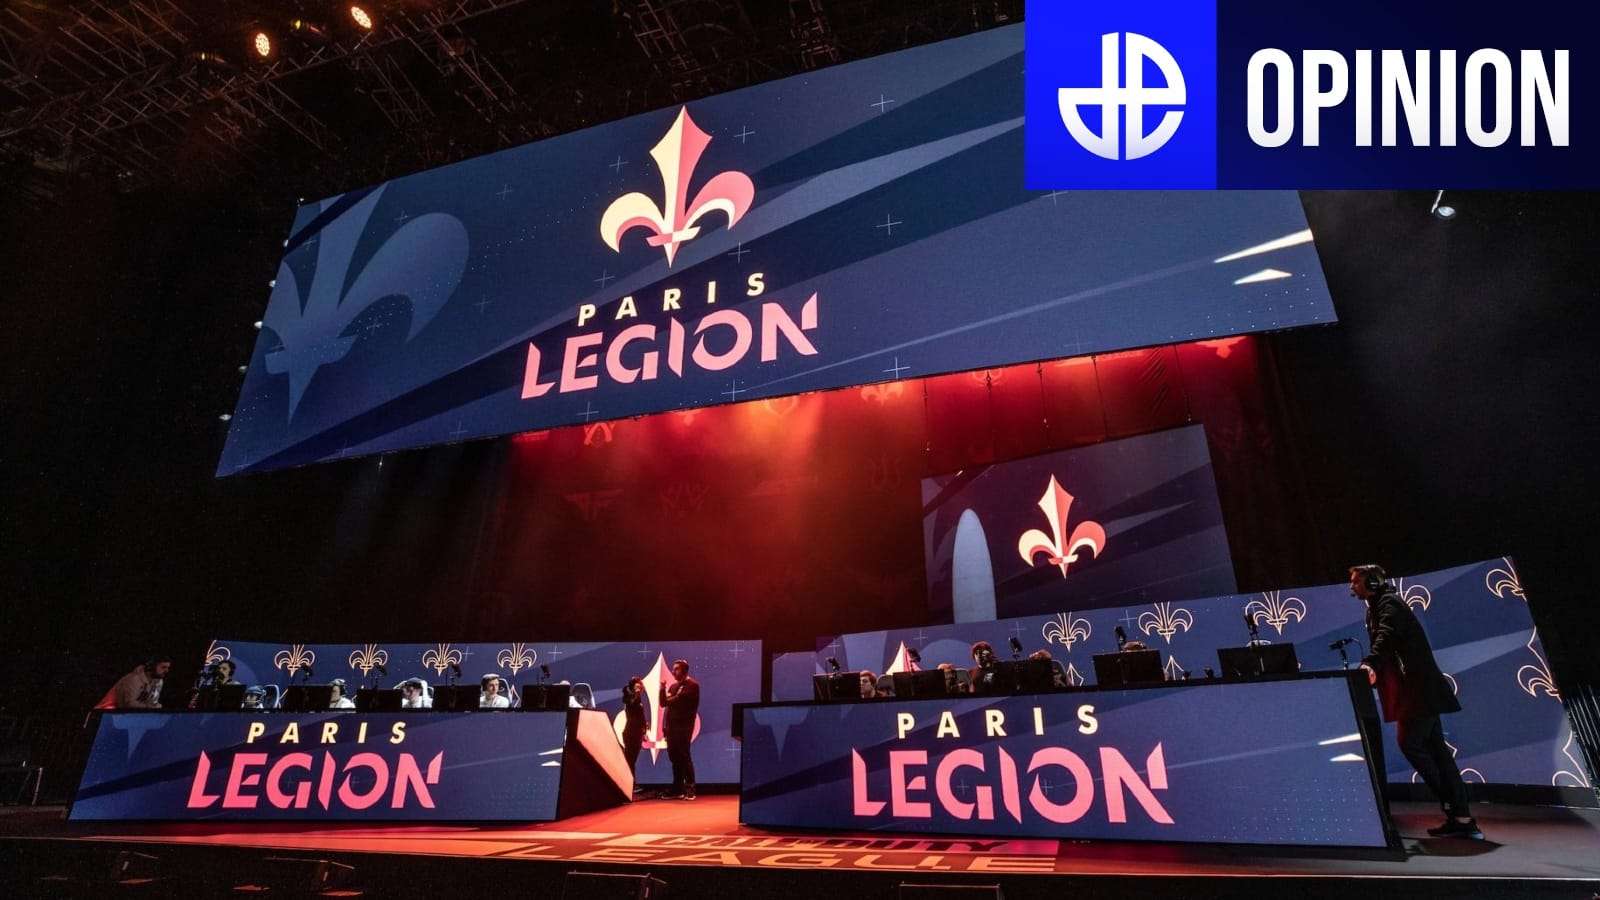 Paris Legion at Call of Duty LAN